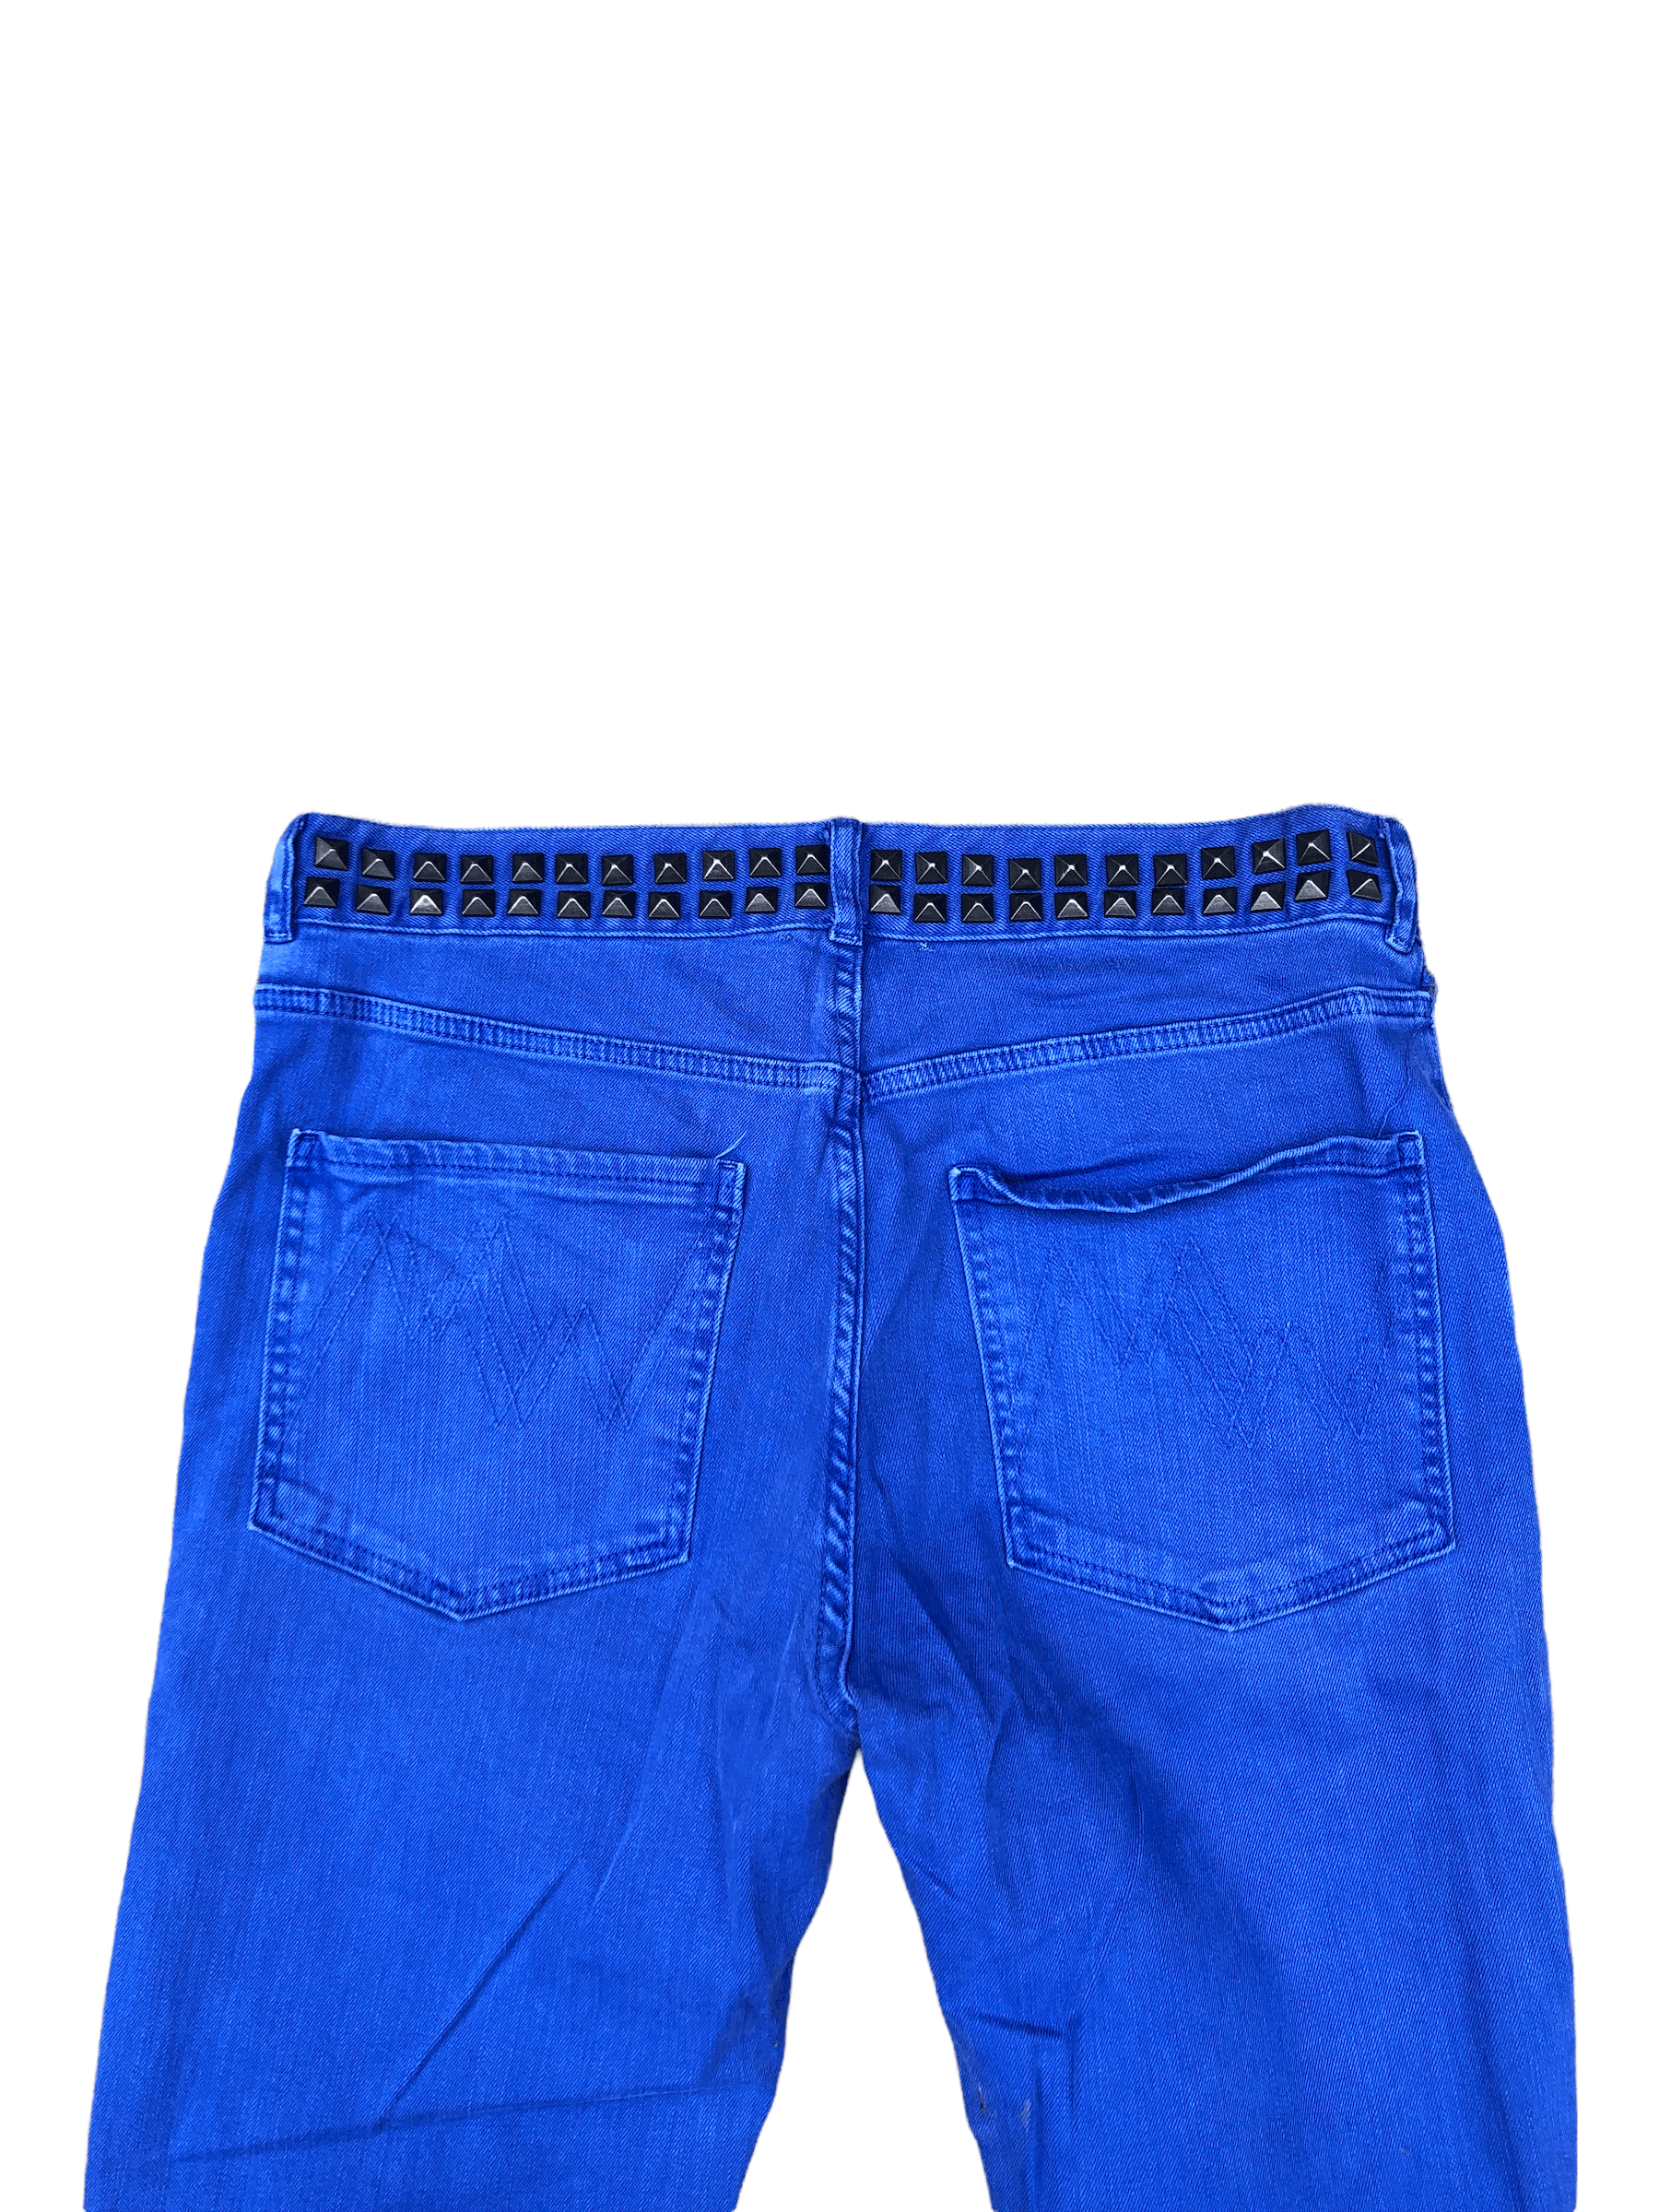 Vintage RARE Matthew Williamson X H&M Studded Jeans Size 34 Blue Size US 34 / EU 50 - 2 Preview